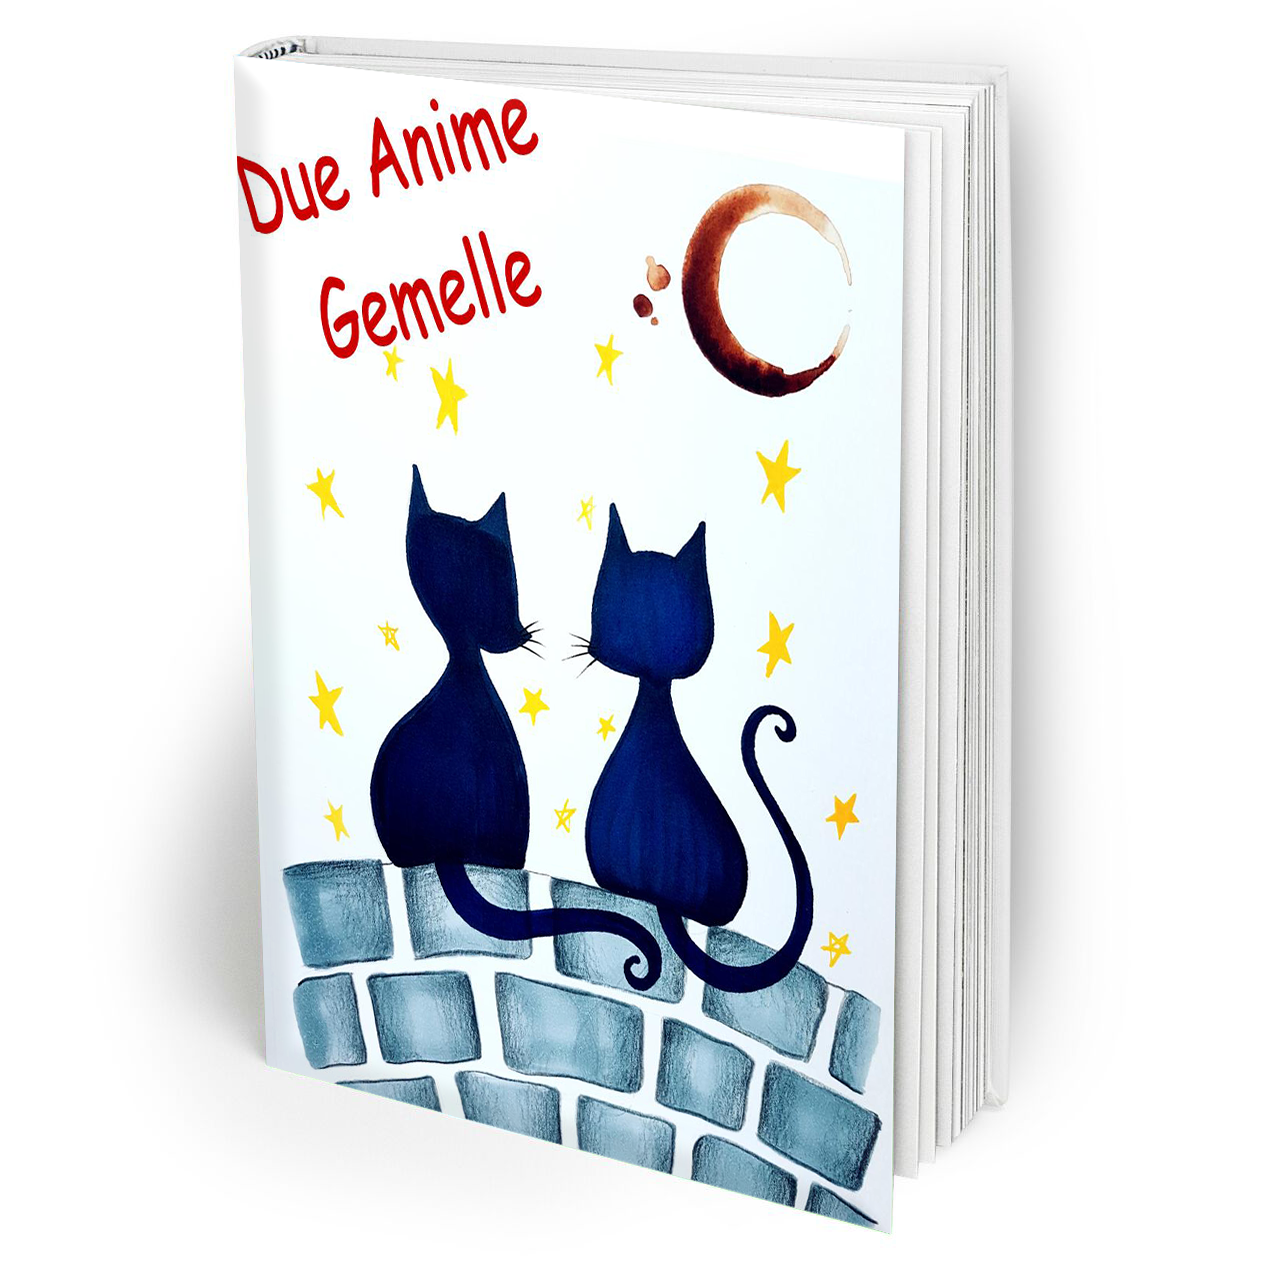 https://libelluscollection.com/wp-content/uploads/2015/02/Libro-Libellus_Due-anime-gemelle.png